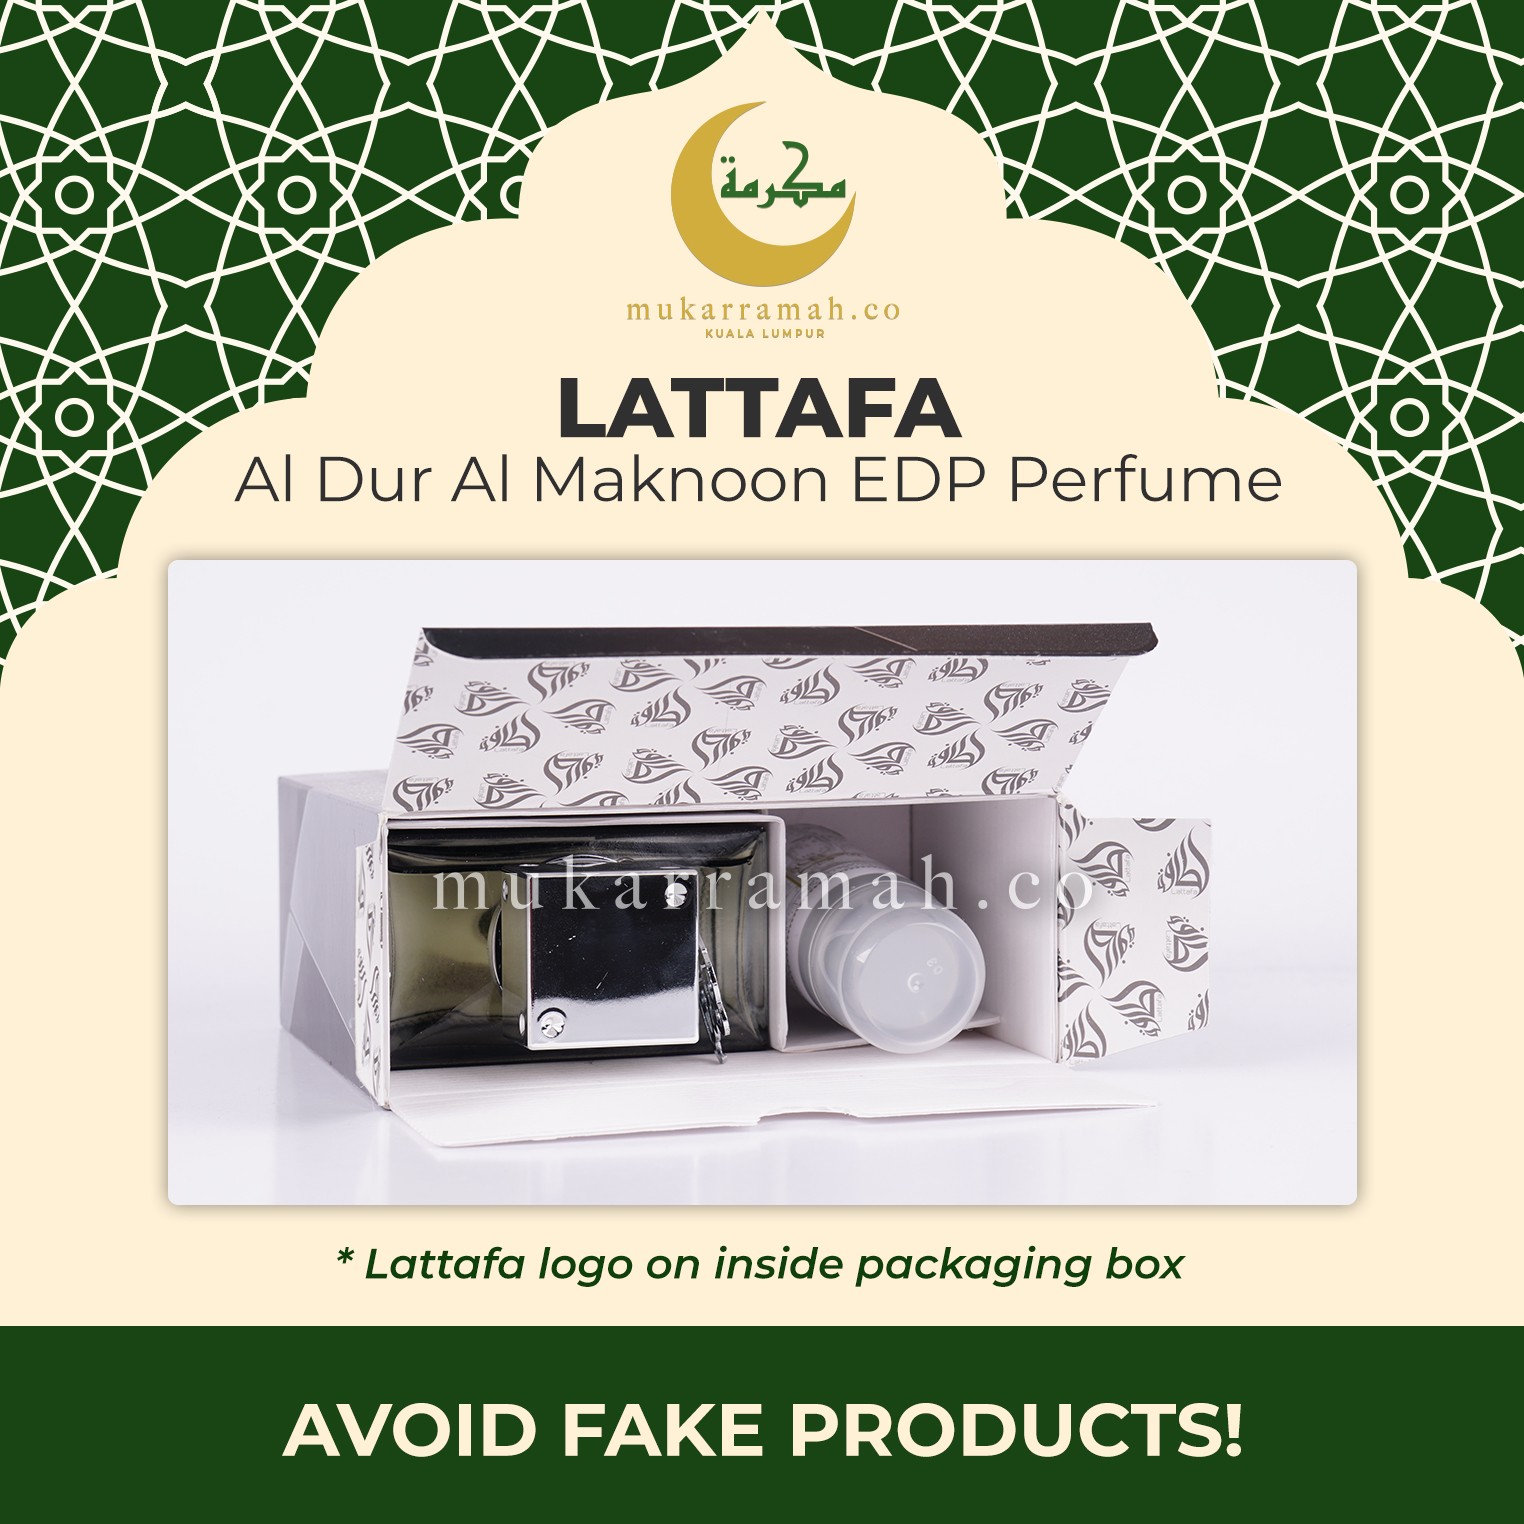 Al Dur Al Maknoon EDP Perfume by Lattafa